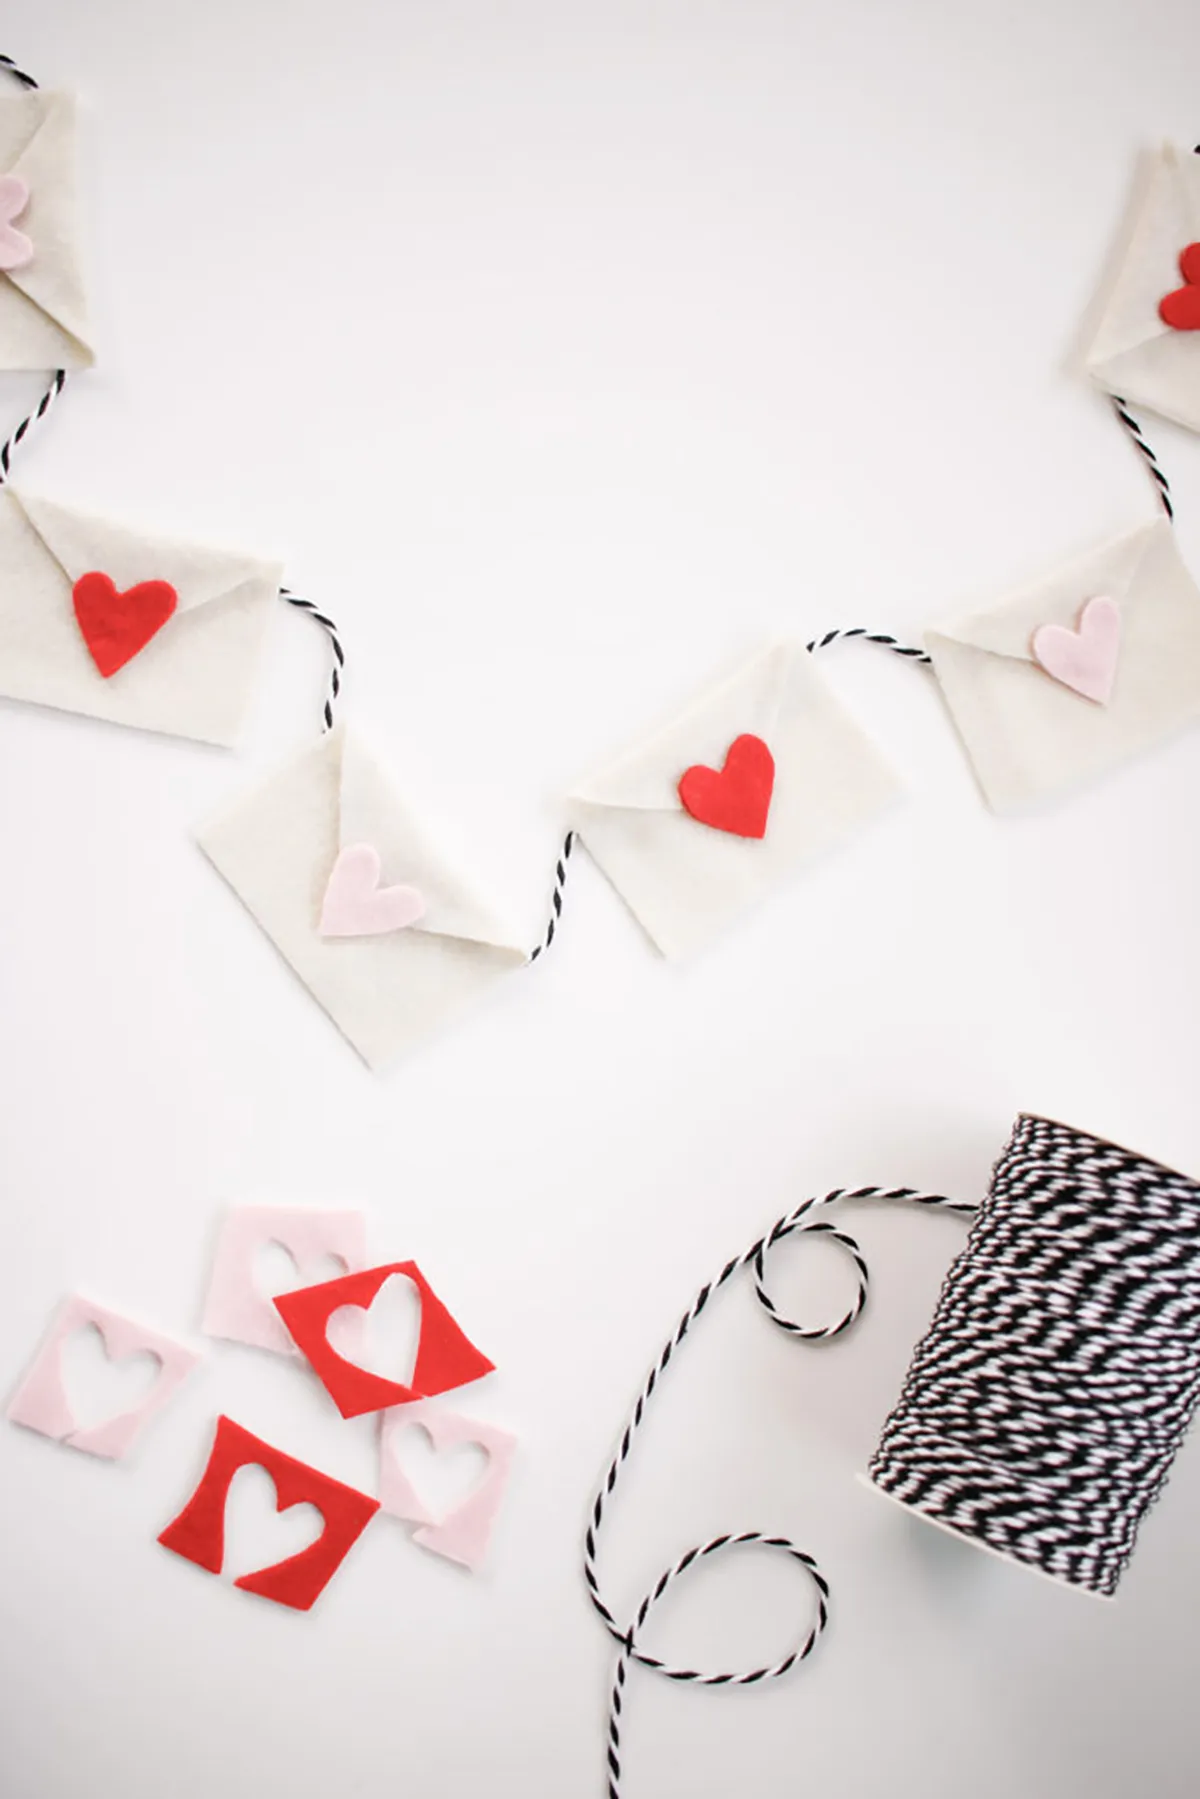 A string of heart envelopes